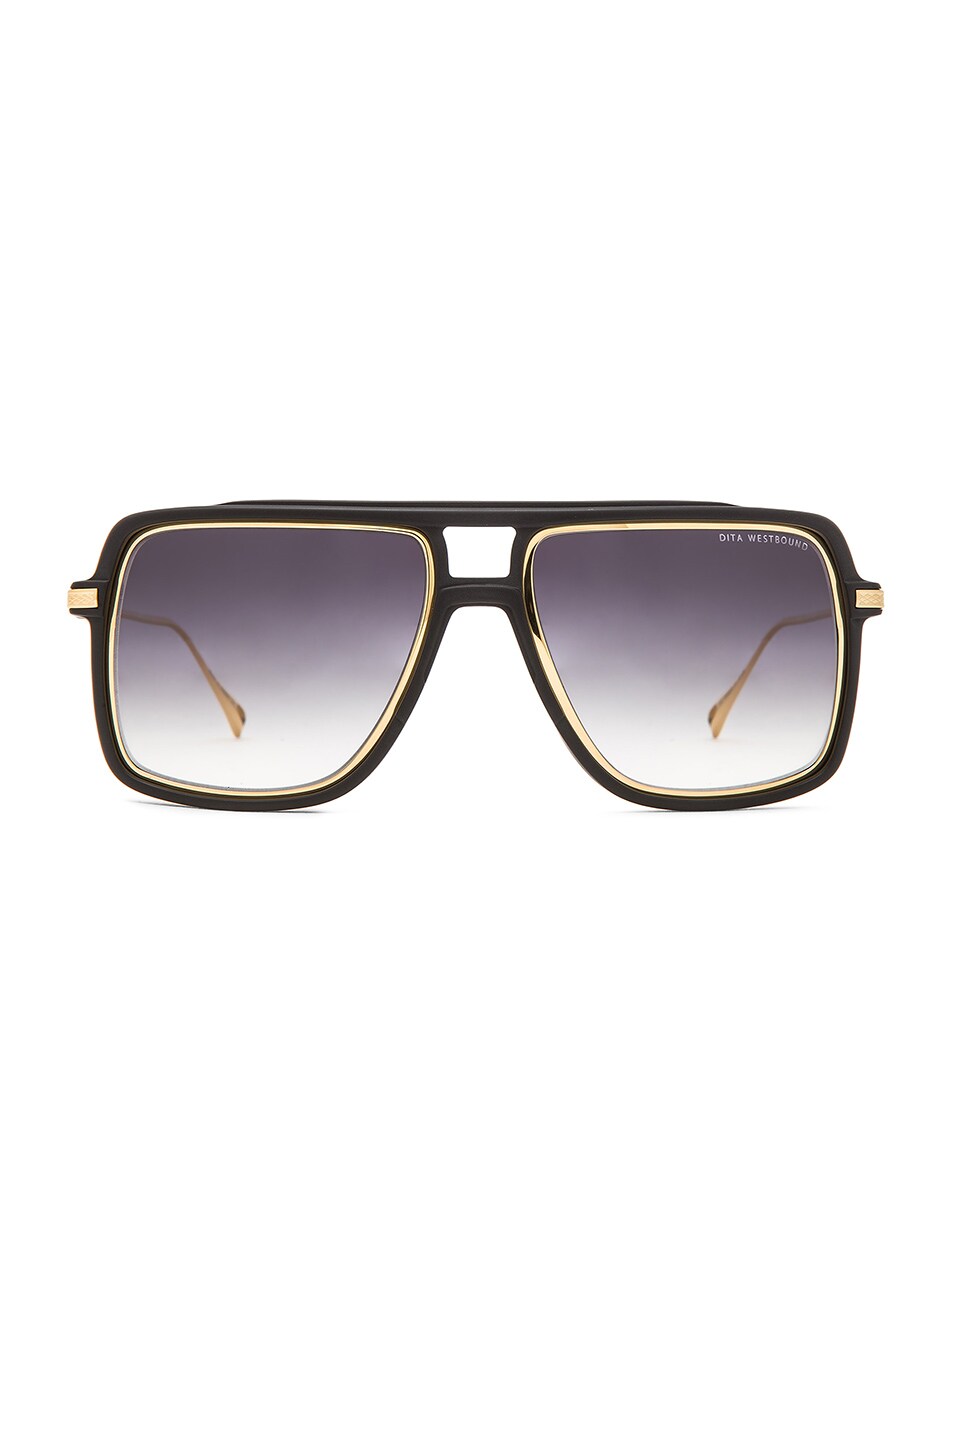 Image 1 of Dita Westbound Sunglasses in 18k Gold & Matte Black